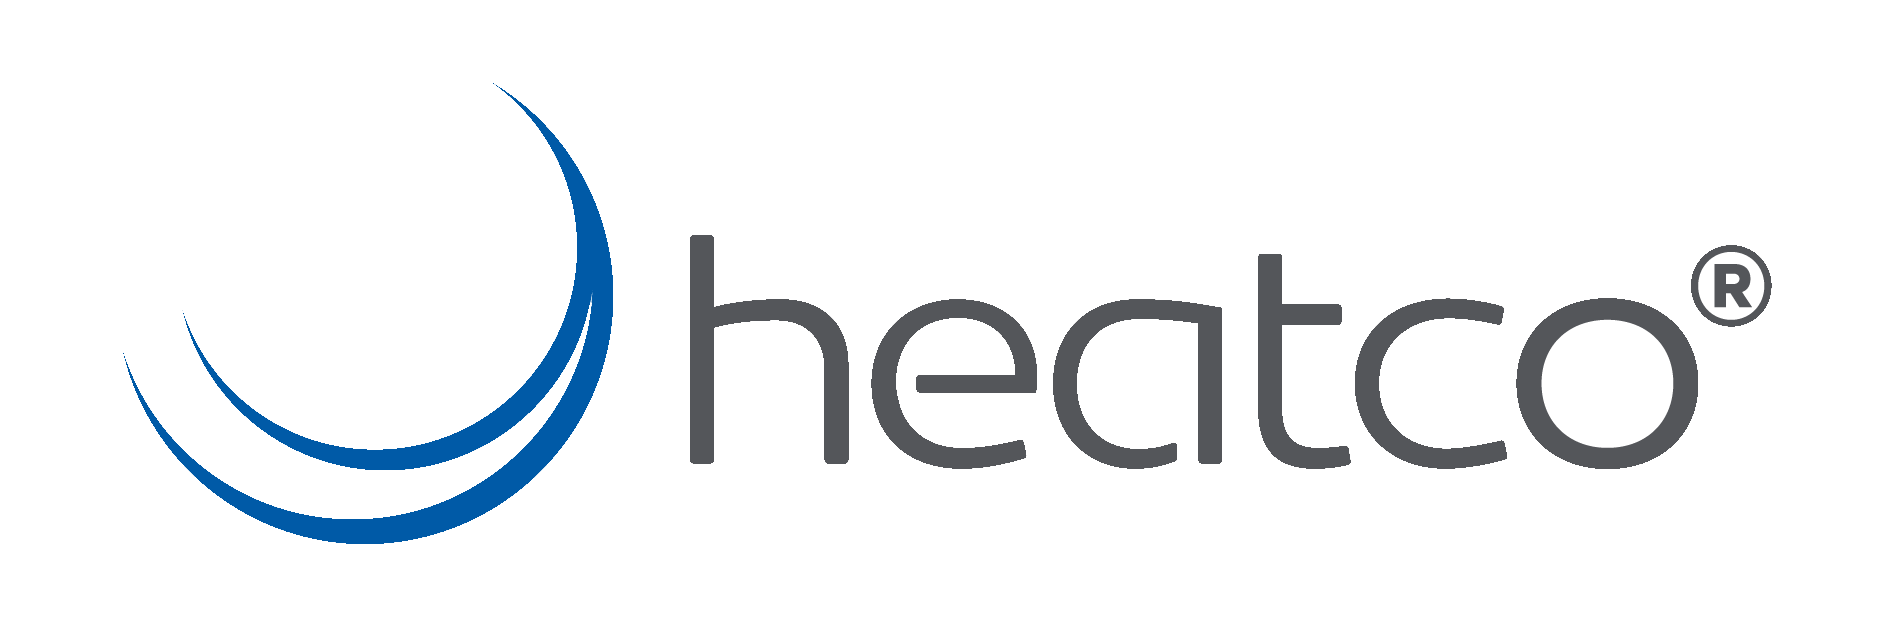 Heatco Finland Logo